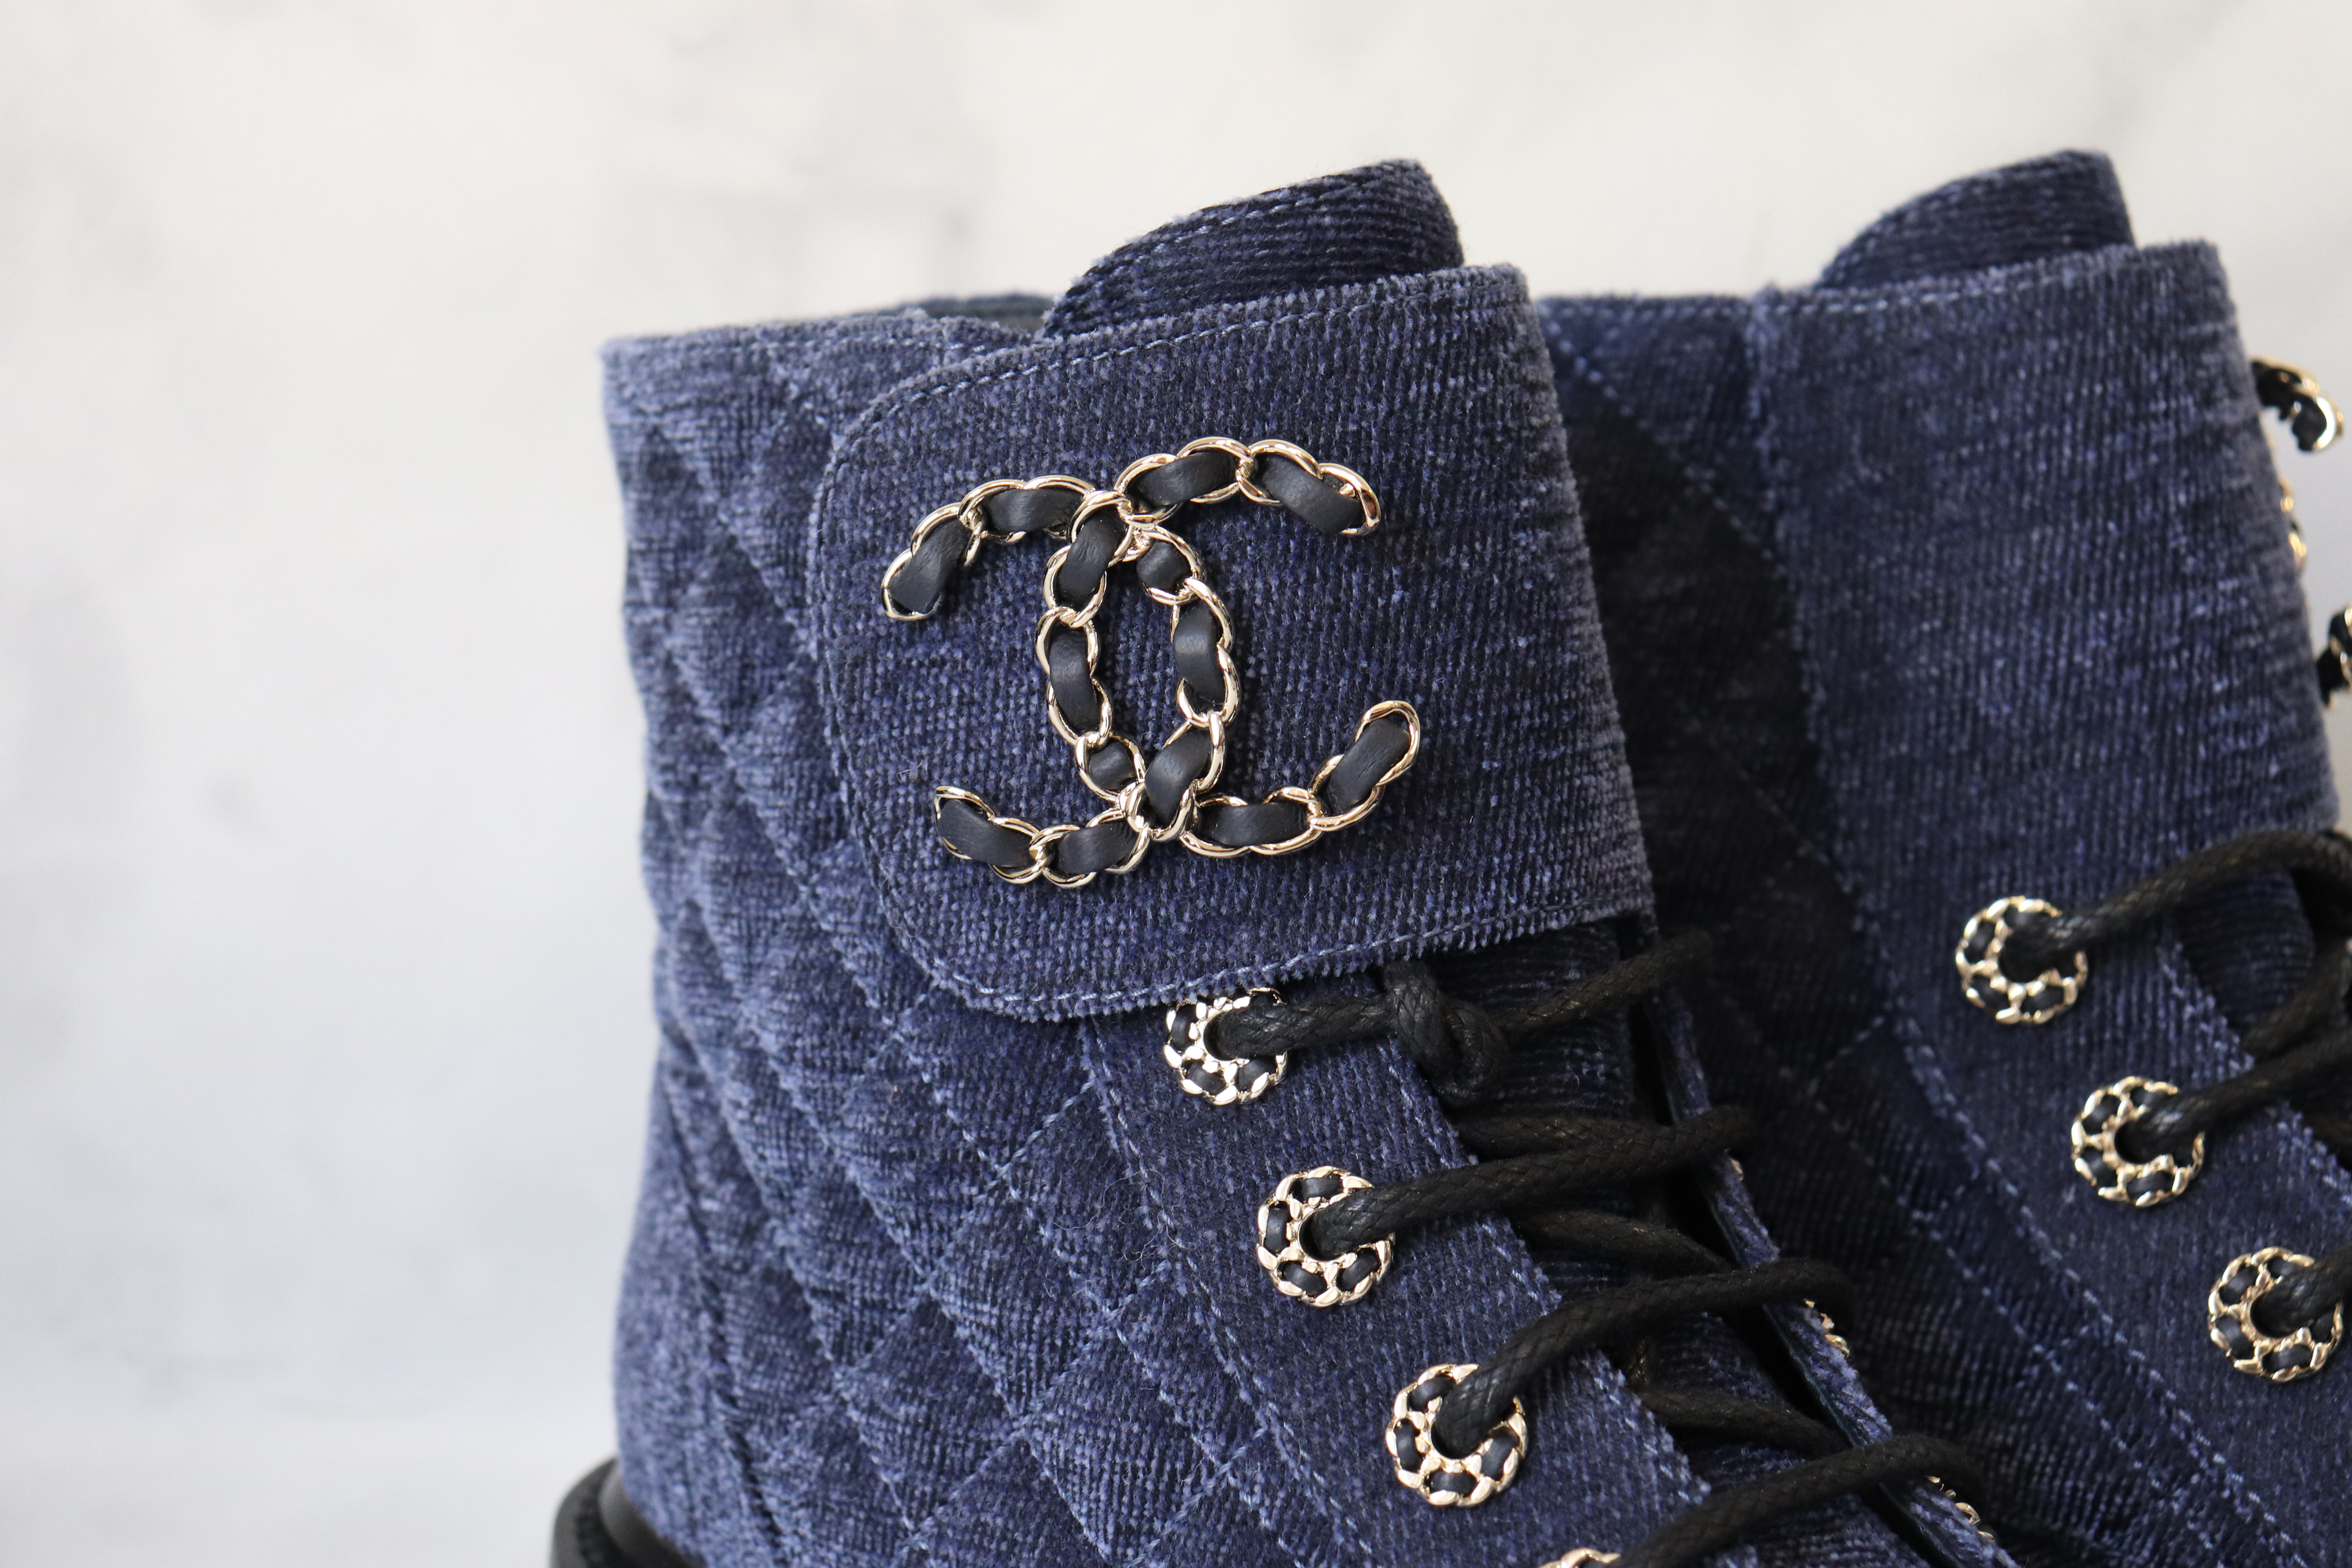 Chanel Boots – JOOLEE Brands